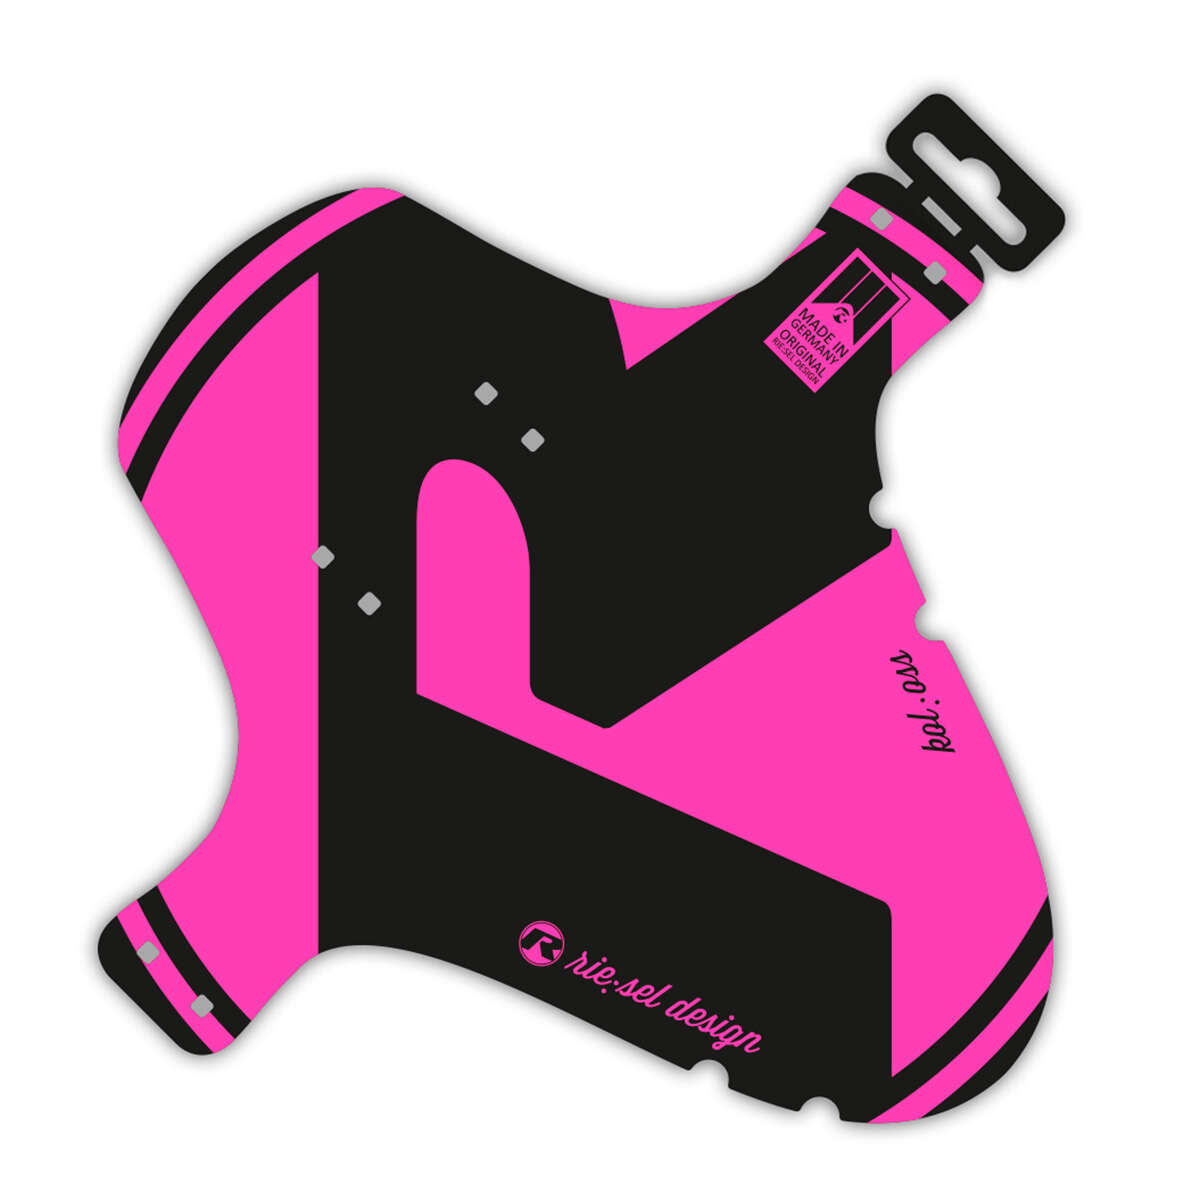 Riesel Design Front Mudguard Kol:oss Pink, 1 Piece